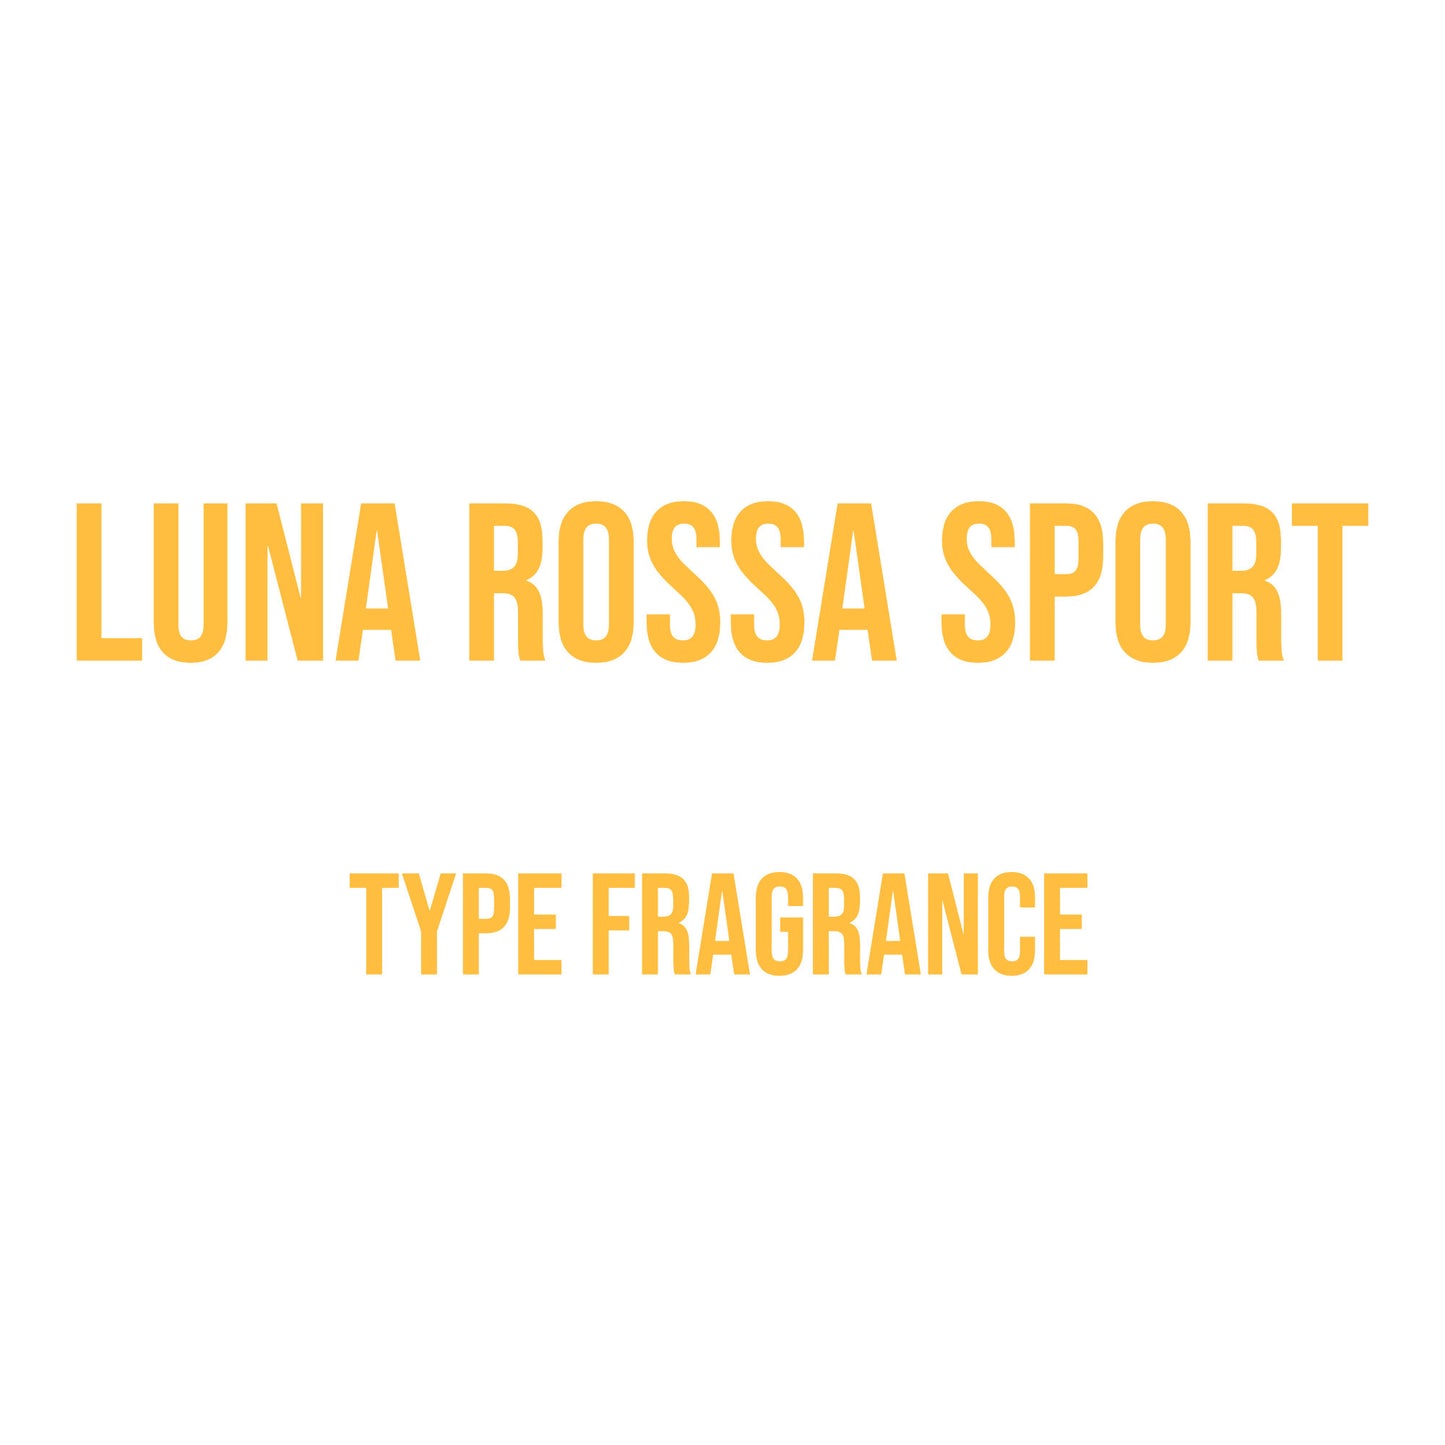 Luna Rossa Sport Type Fragrance